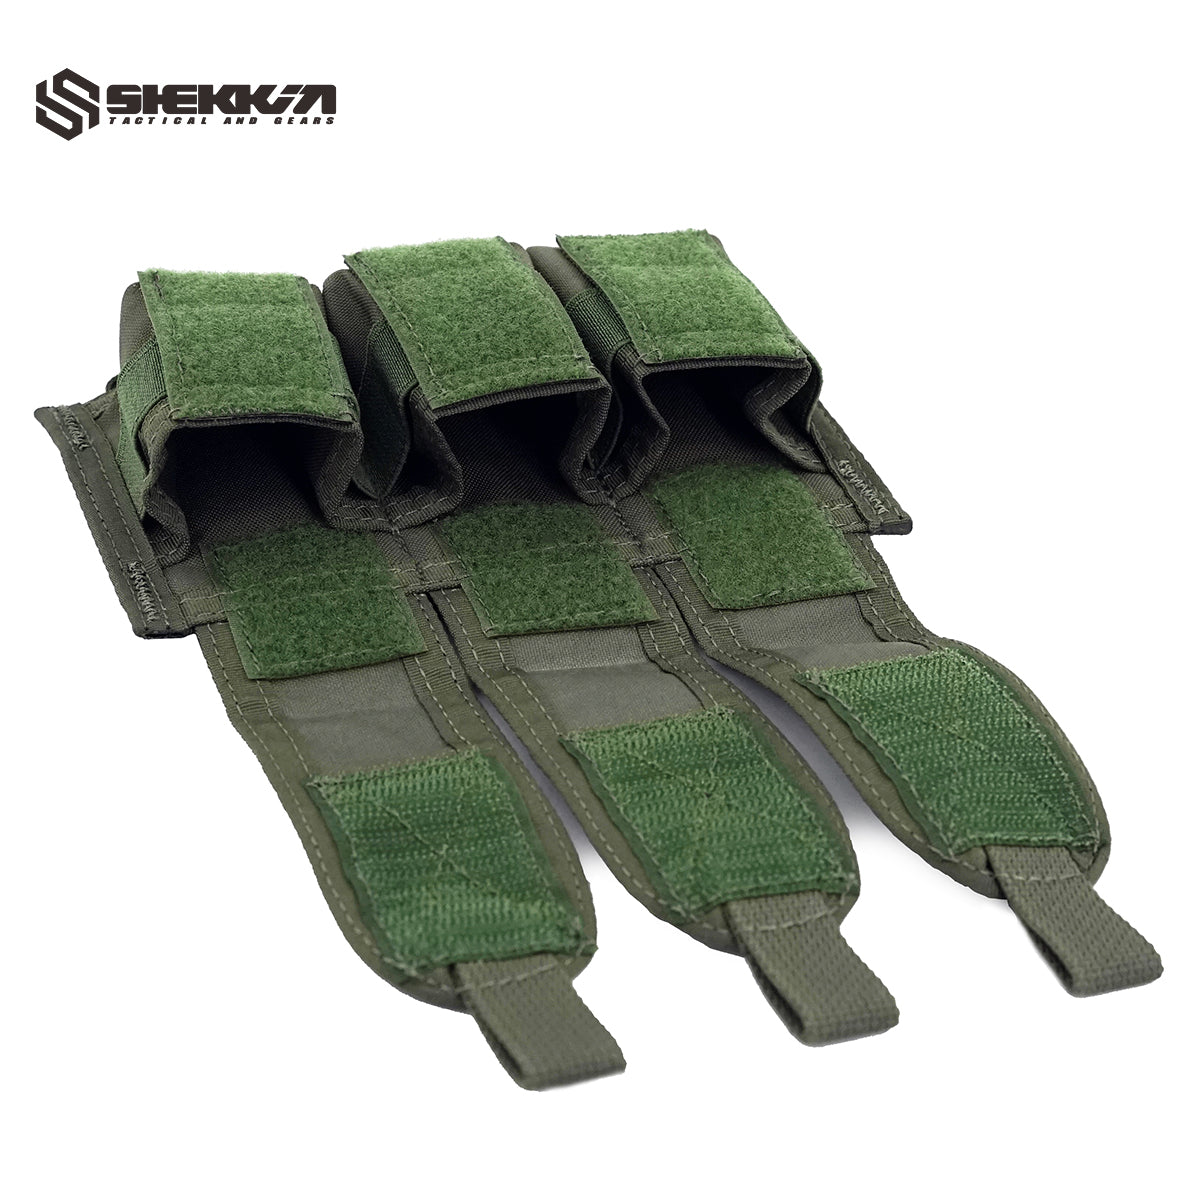 Pre MSA paraclete style triple flashbang pouch - Shekkin Gears